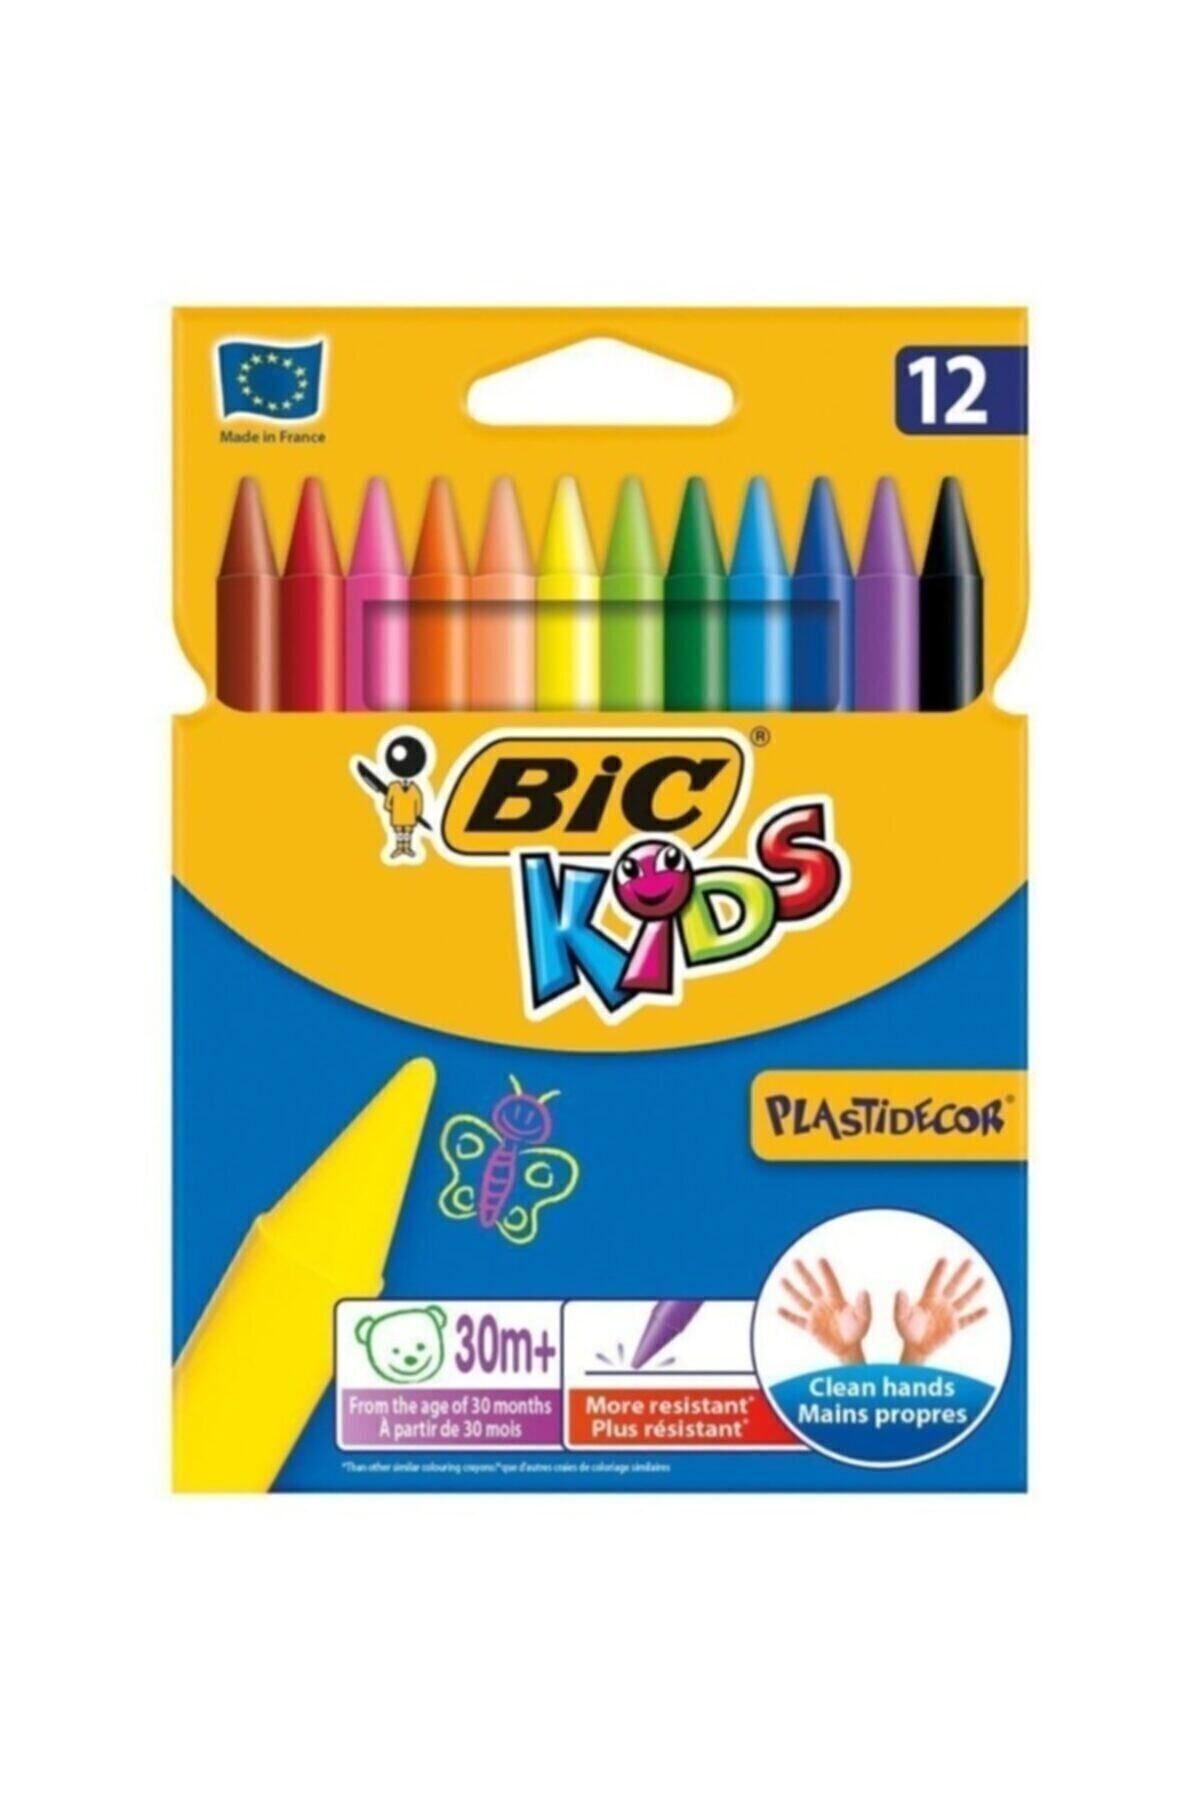 Bic Kids Plastidecor Silinebilir Pastel Boya 12 Adet P457S6371